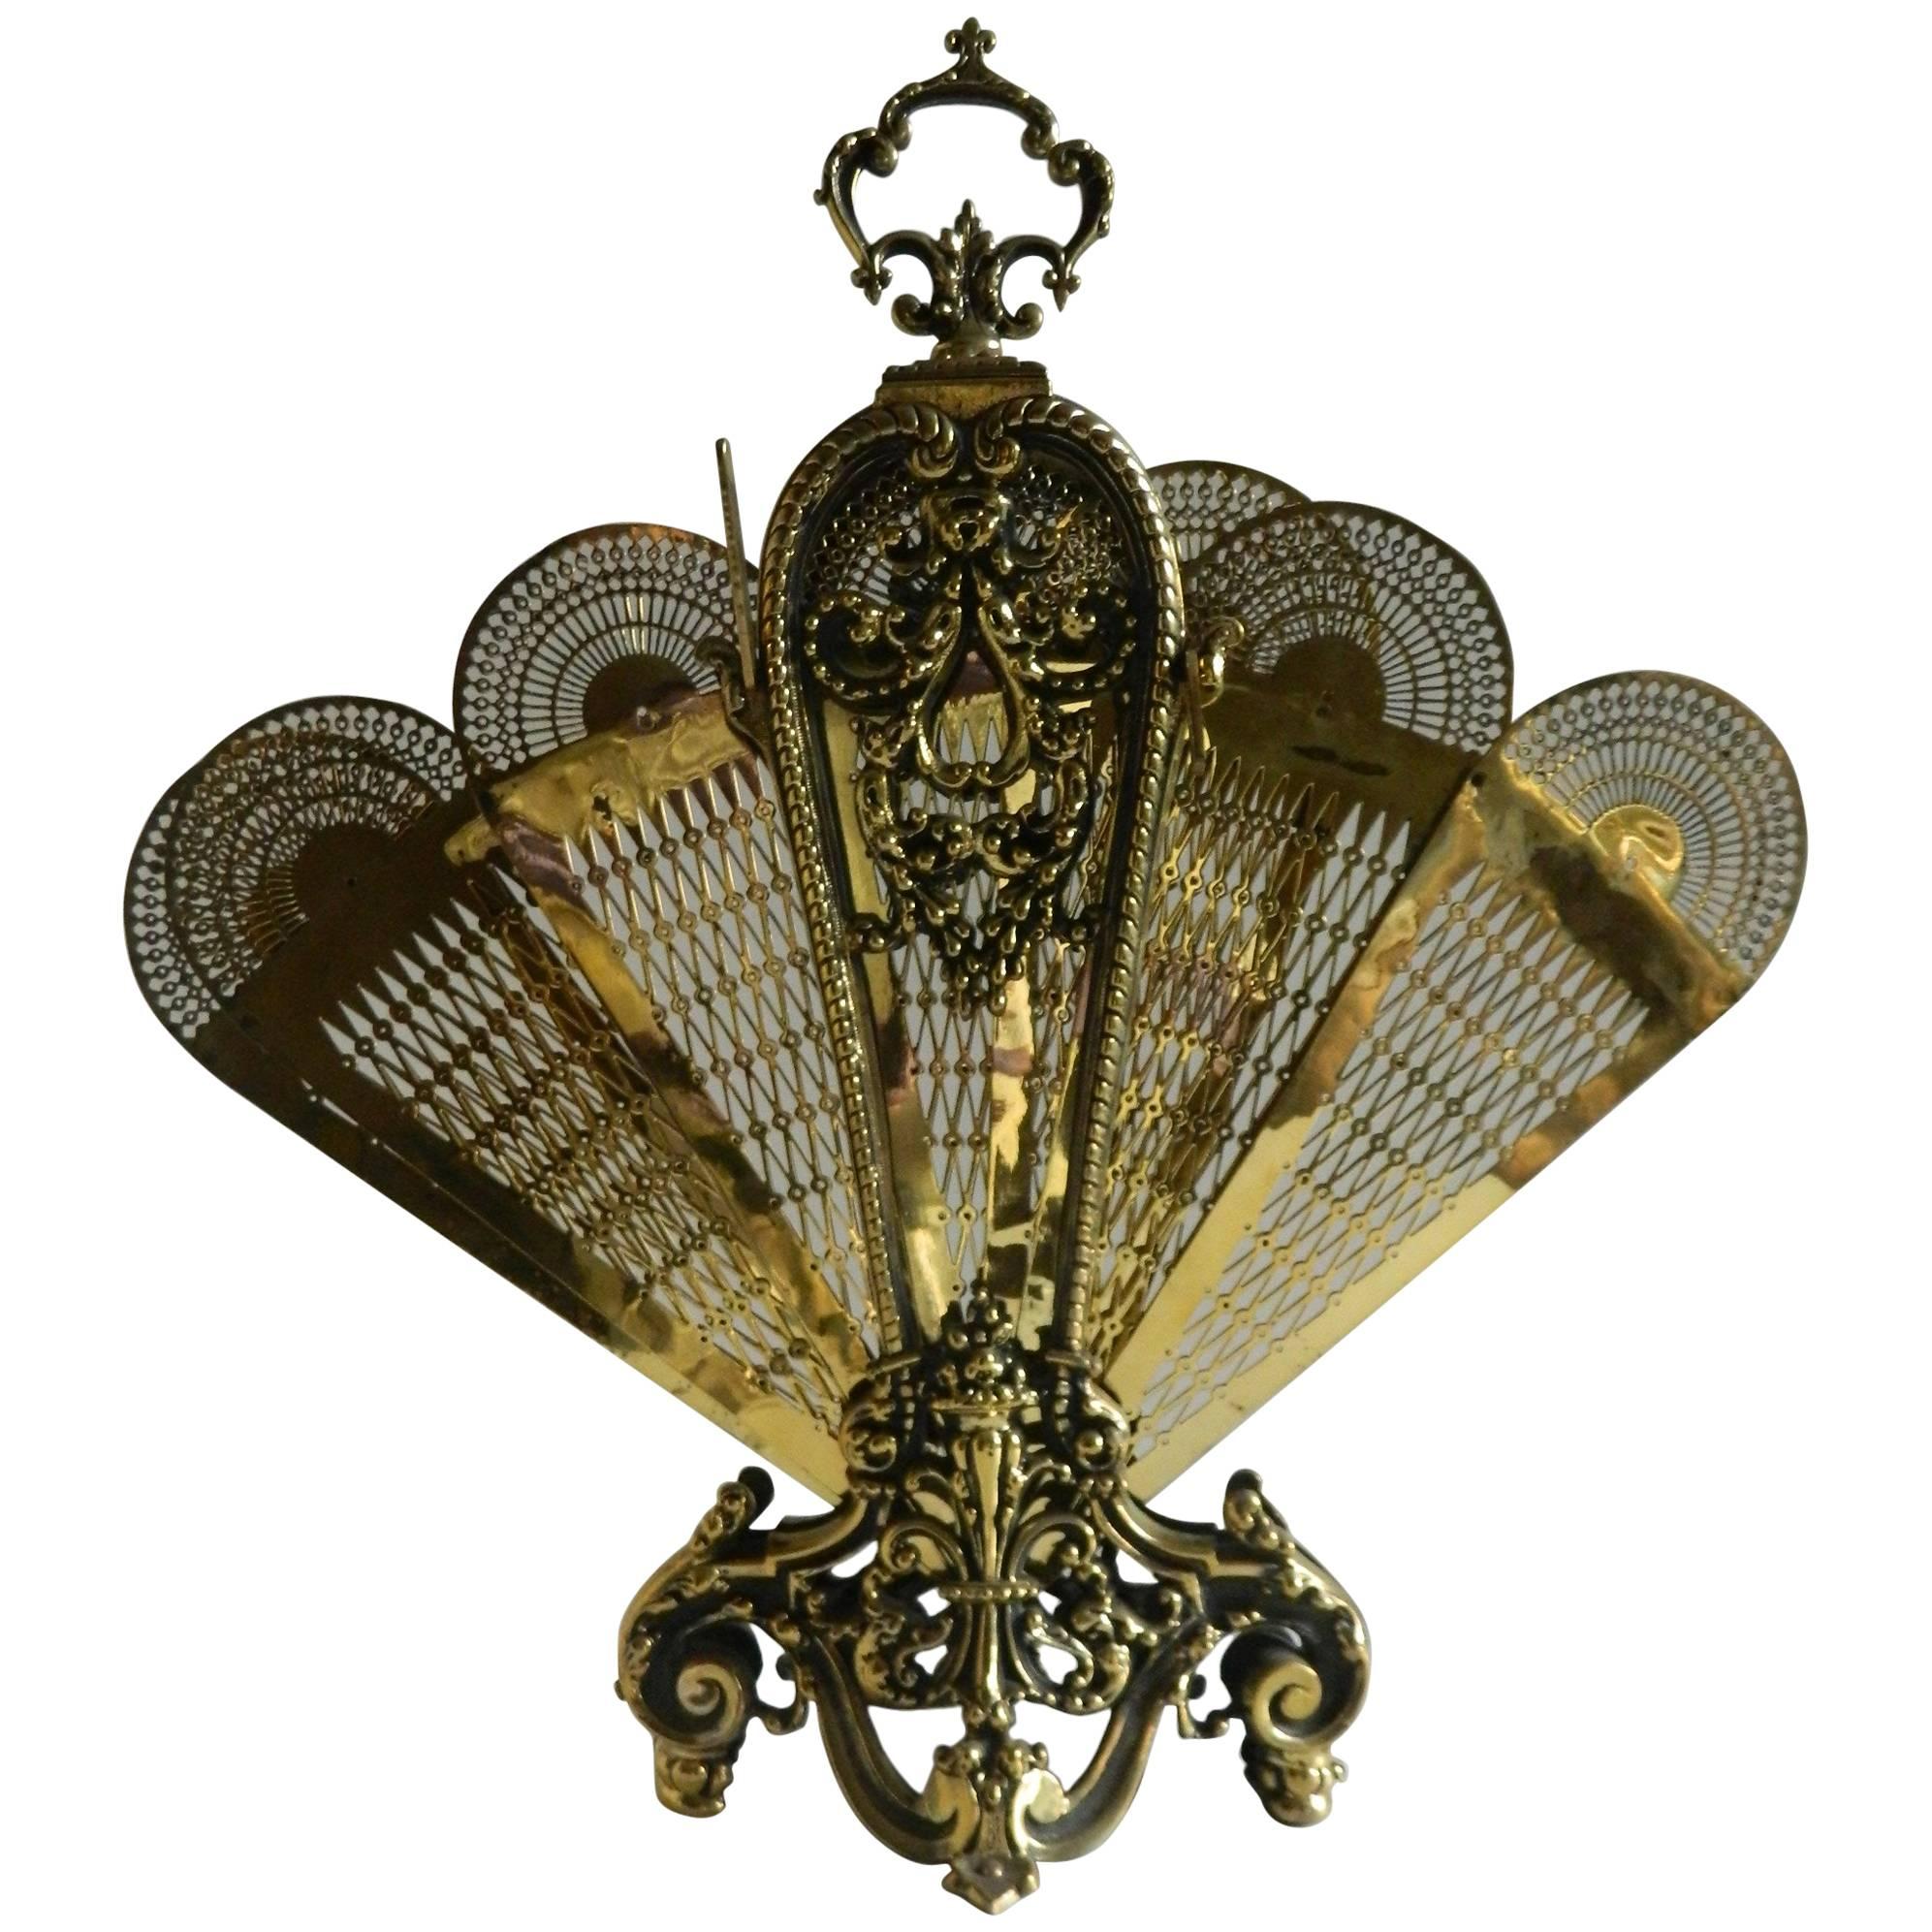 French Polished Brass Fan Fire Screen, 19th Century